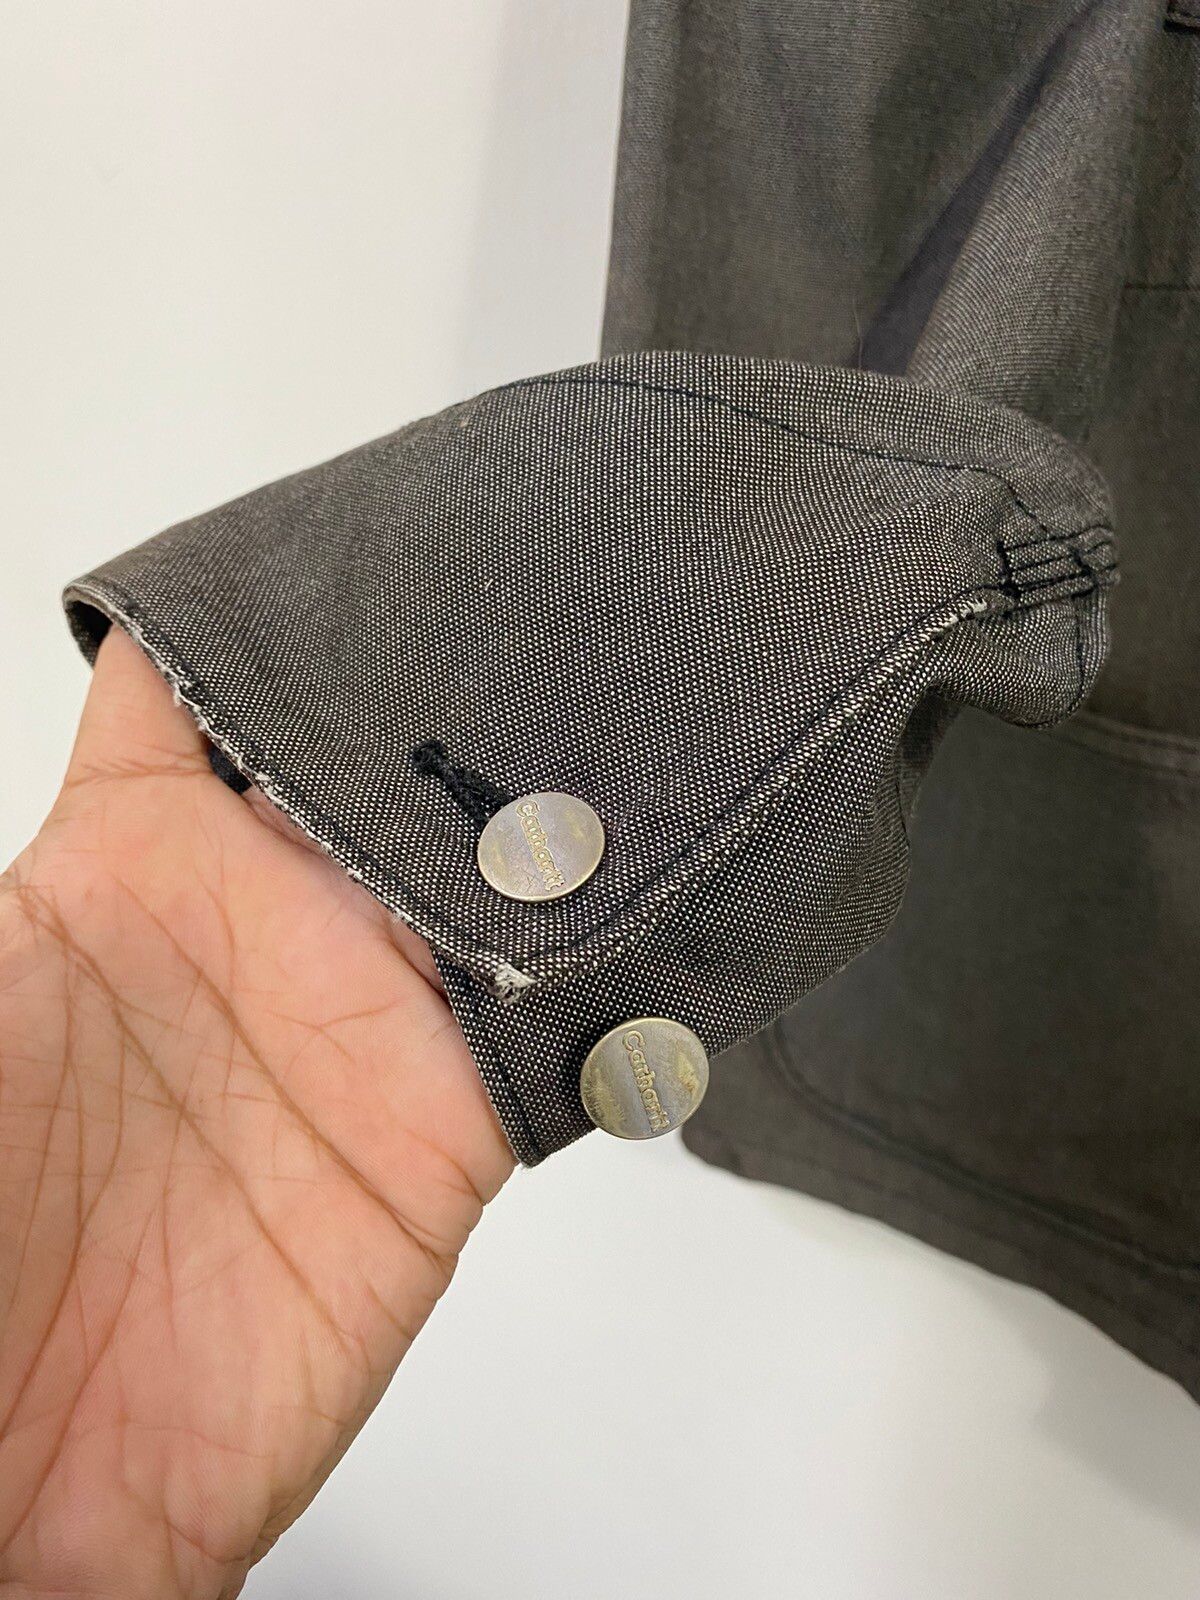 Carhartt Chore Jacket 4 Pocket Design Rare Design - 7